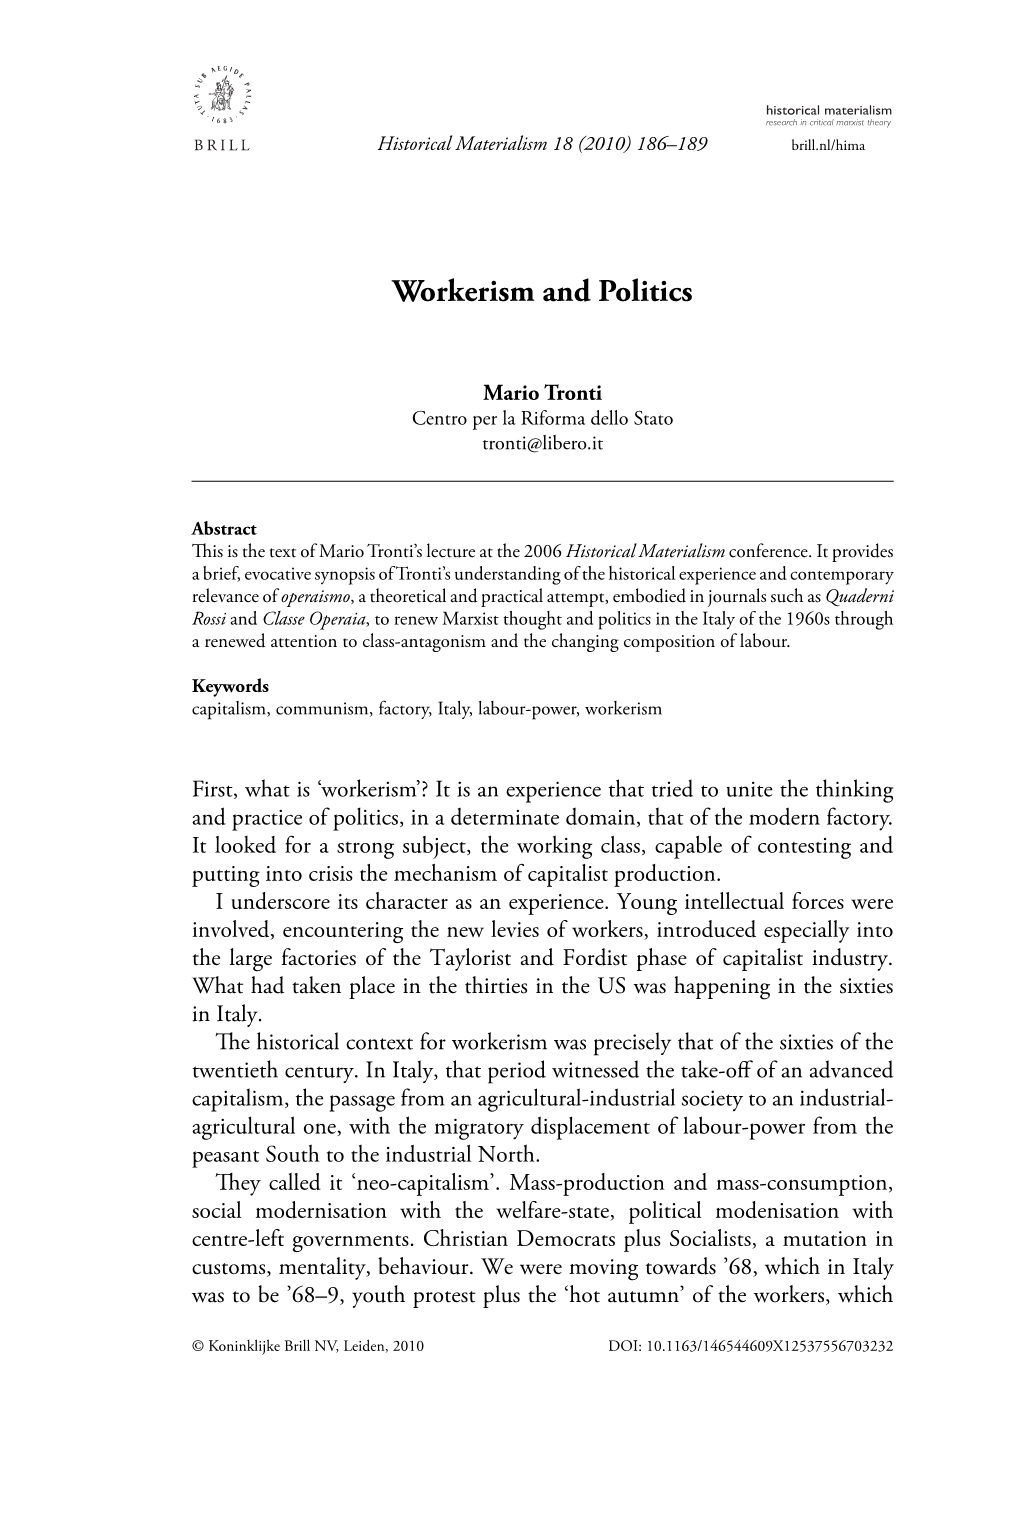 Workerism and Politics